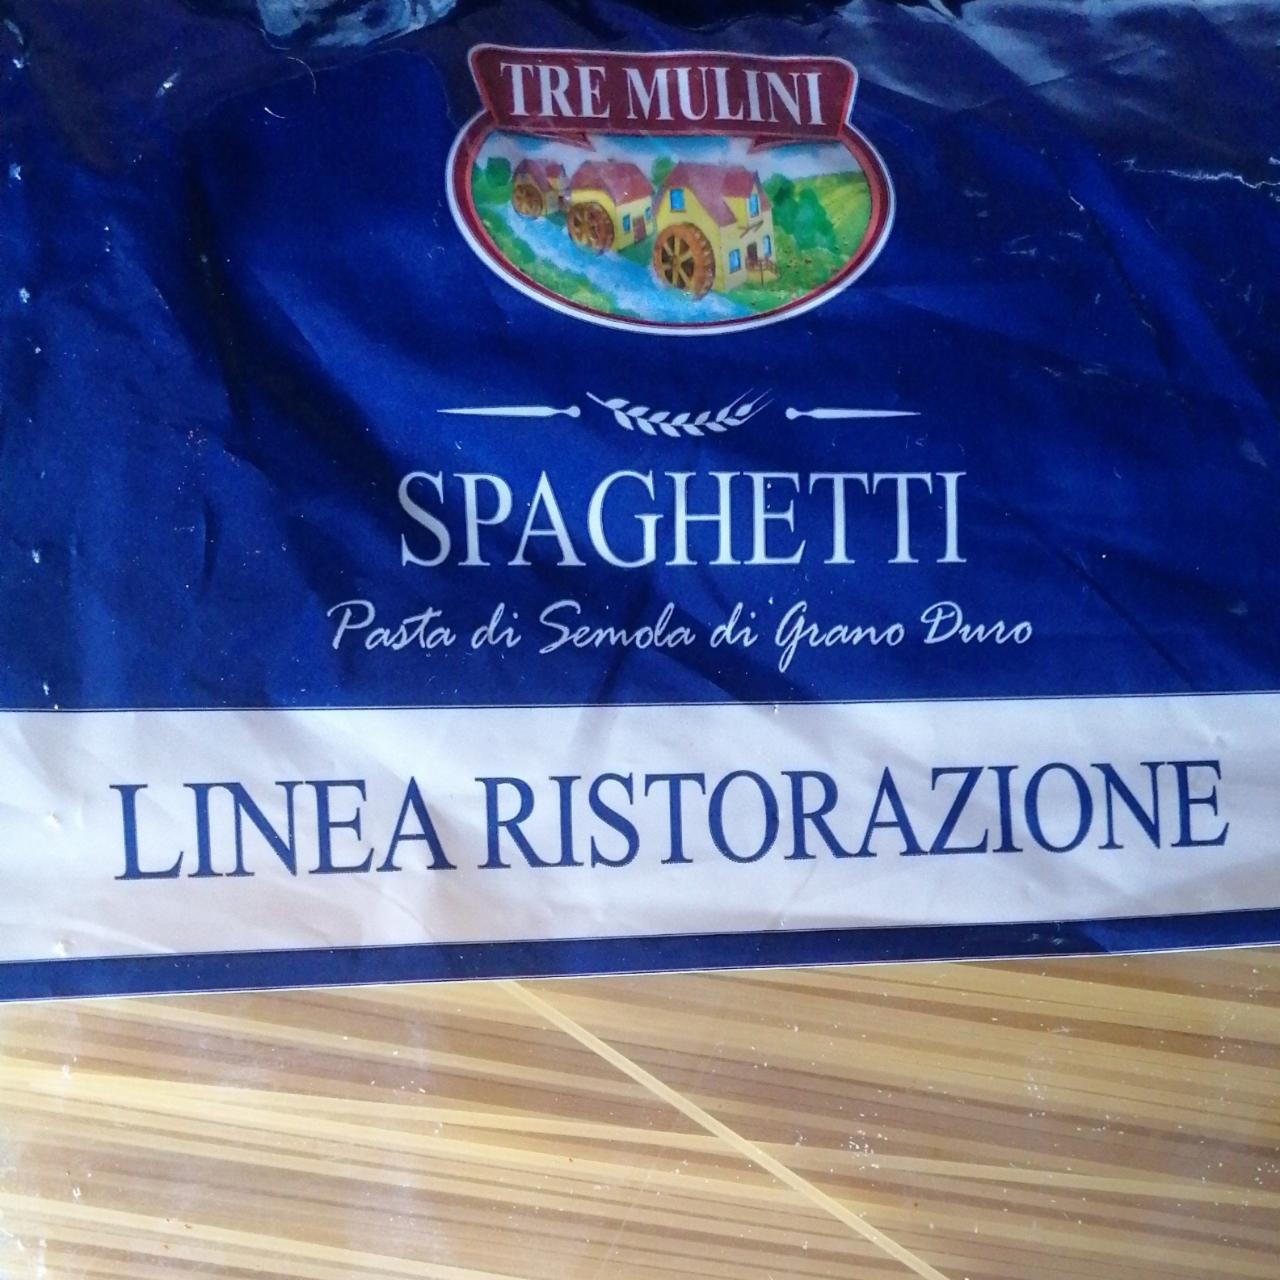 Fotografie - Spaghetti Tre mulini